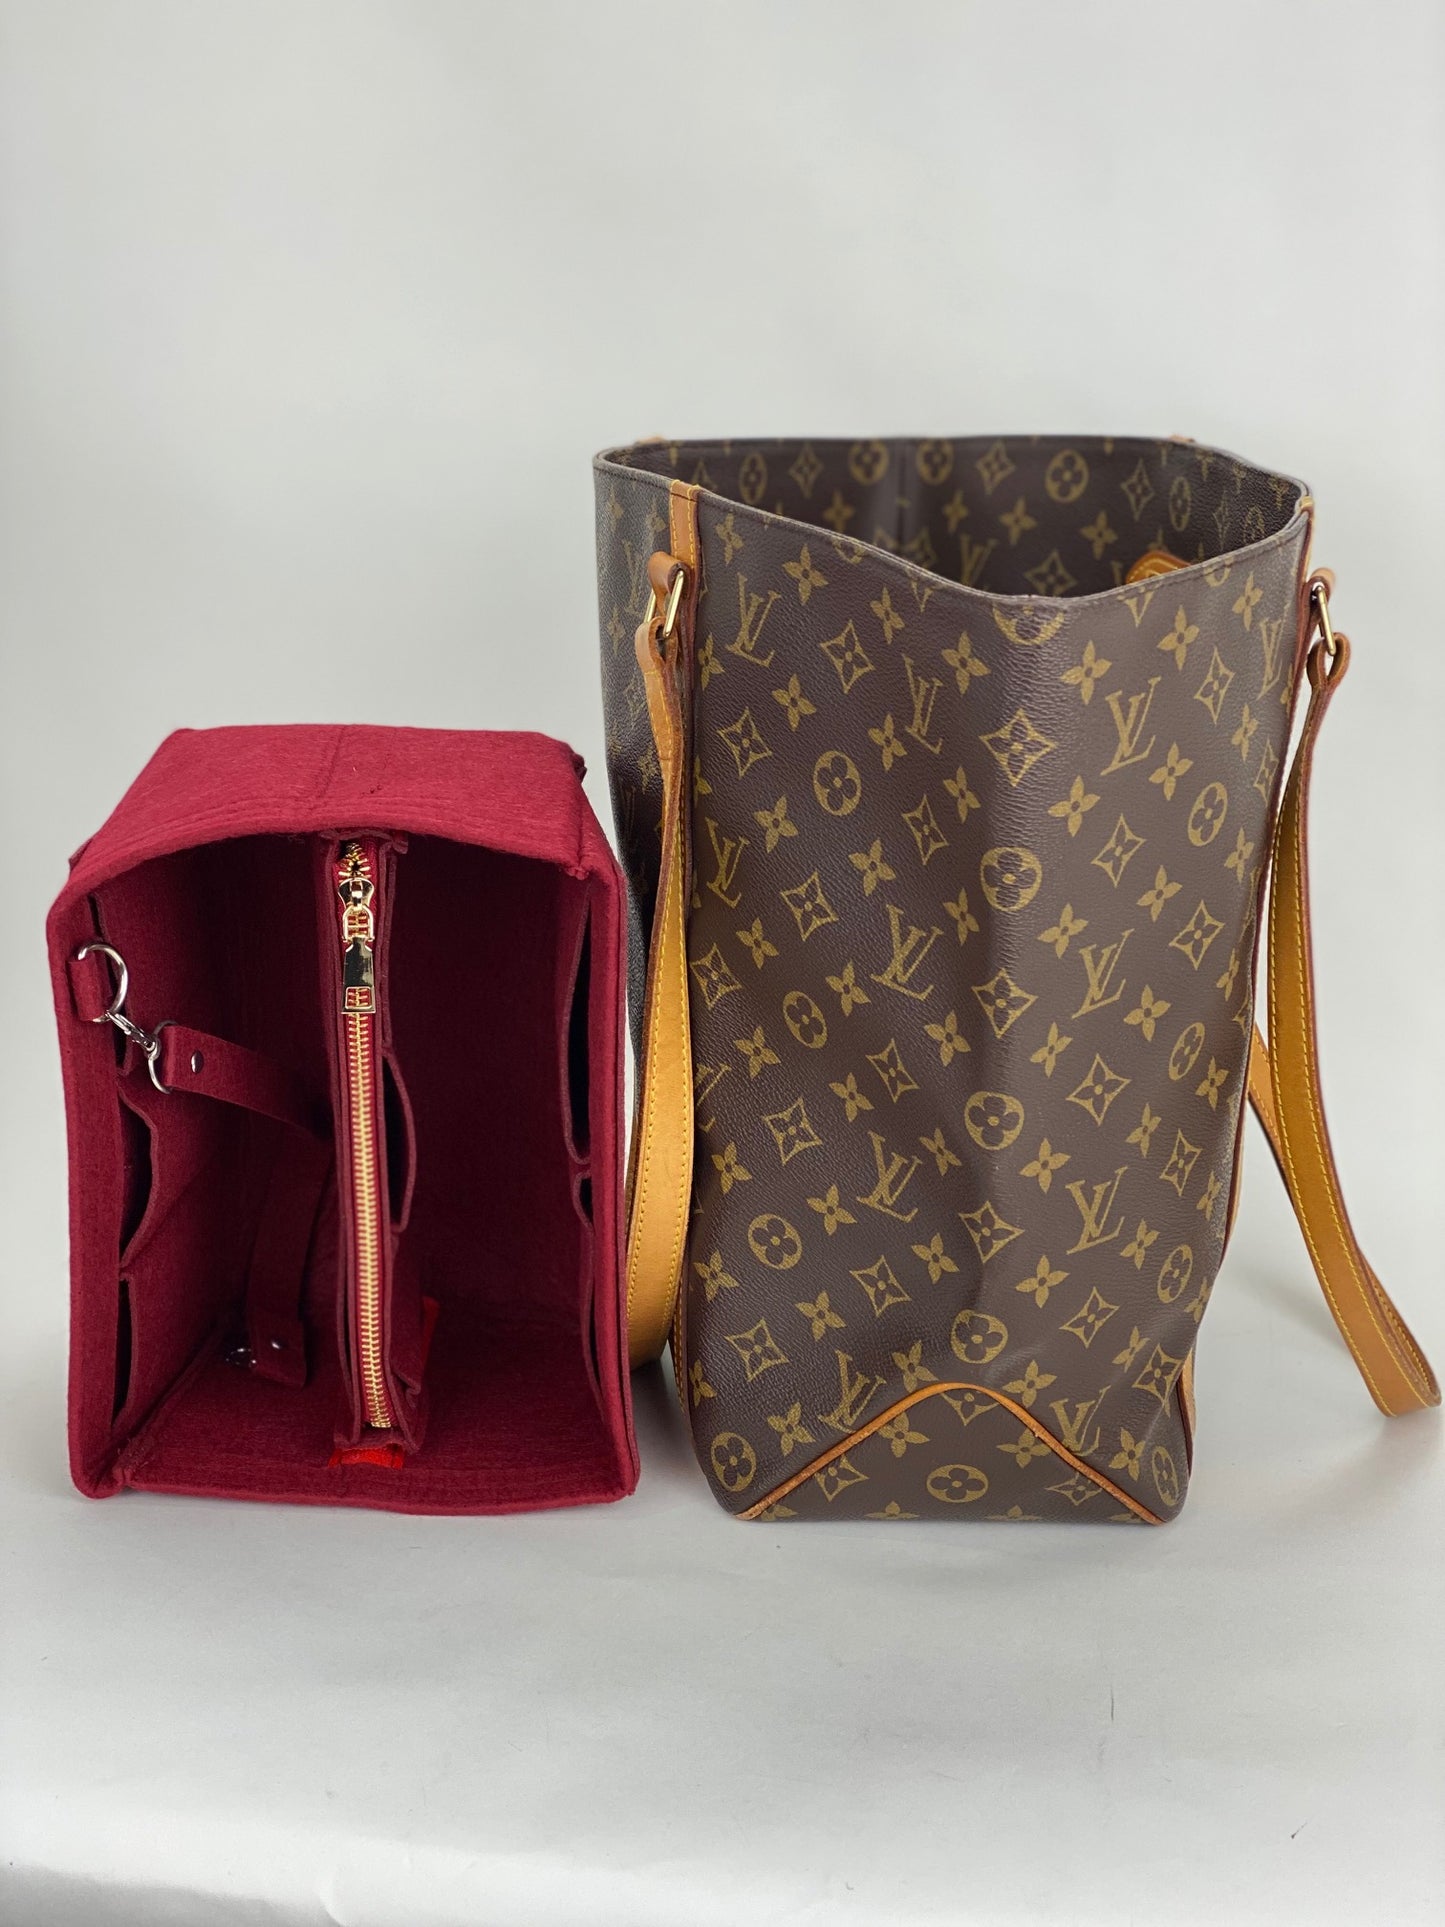 Louis Vuitton Handbag Sac Shopping Monogram Canvas Tote Bag W